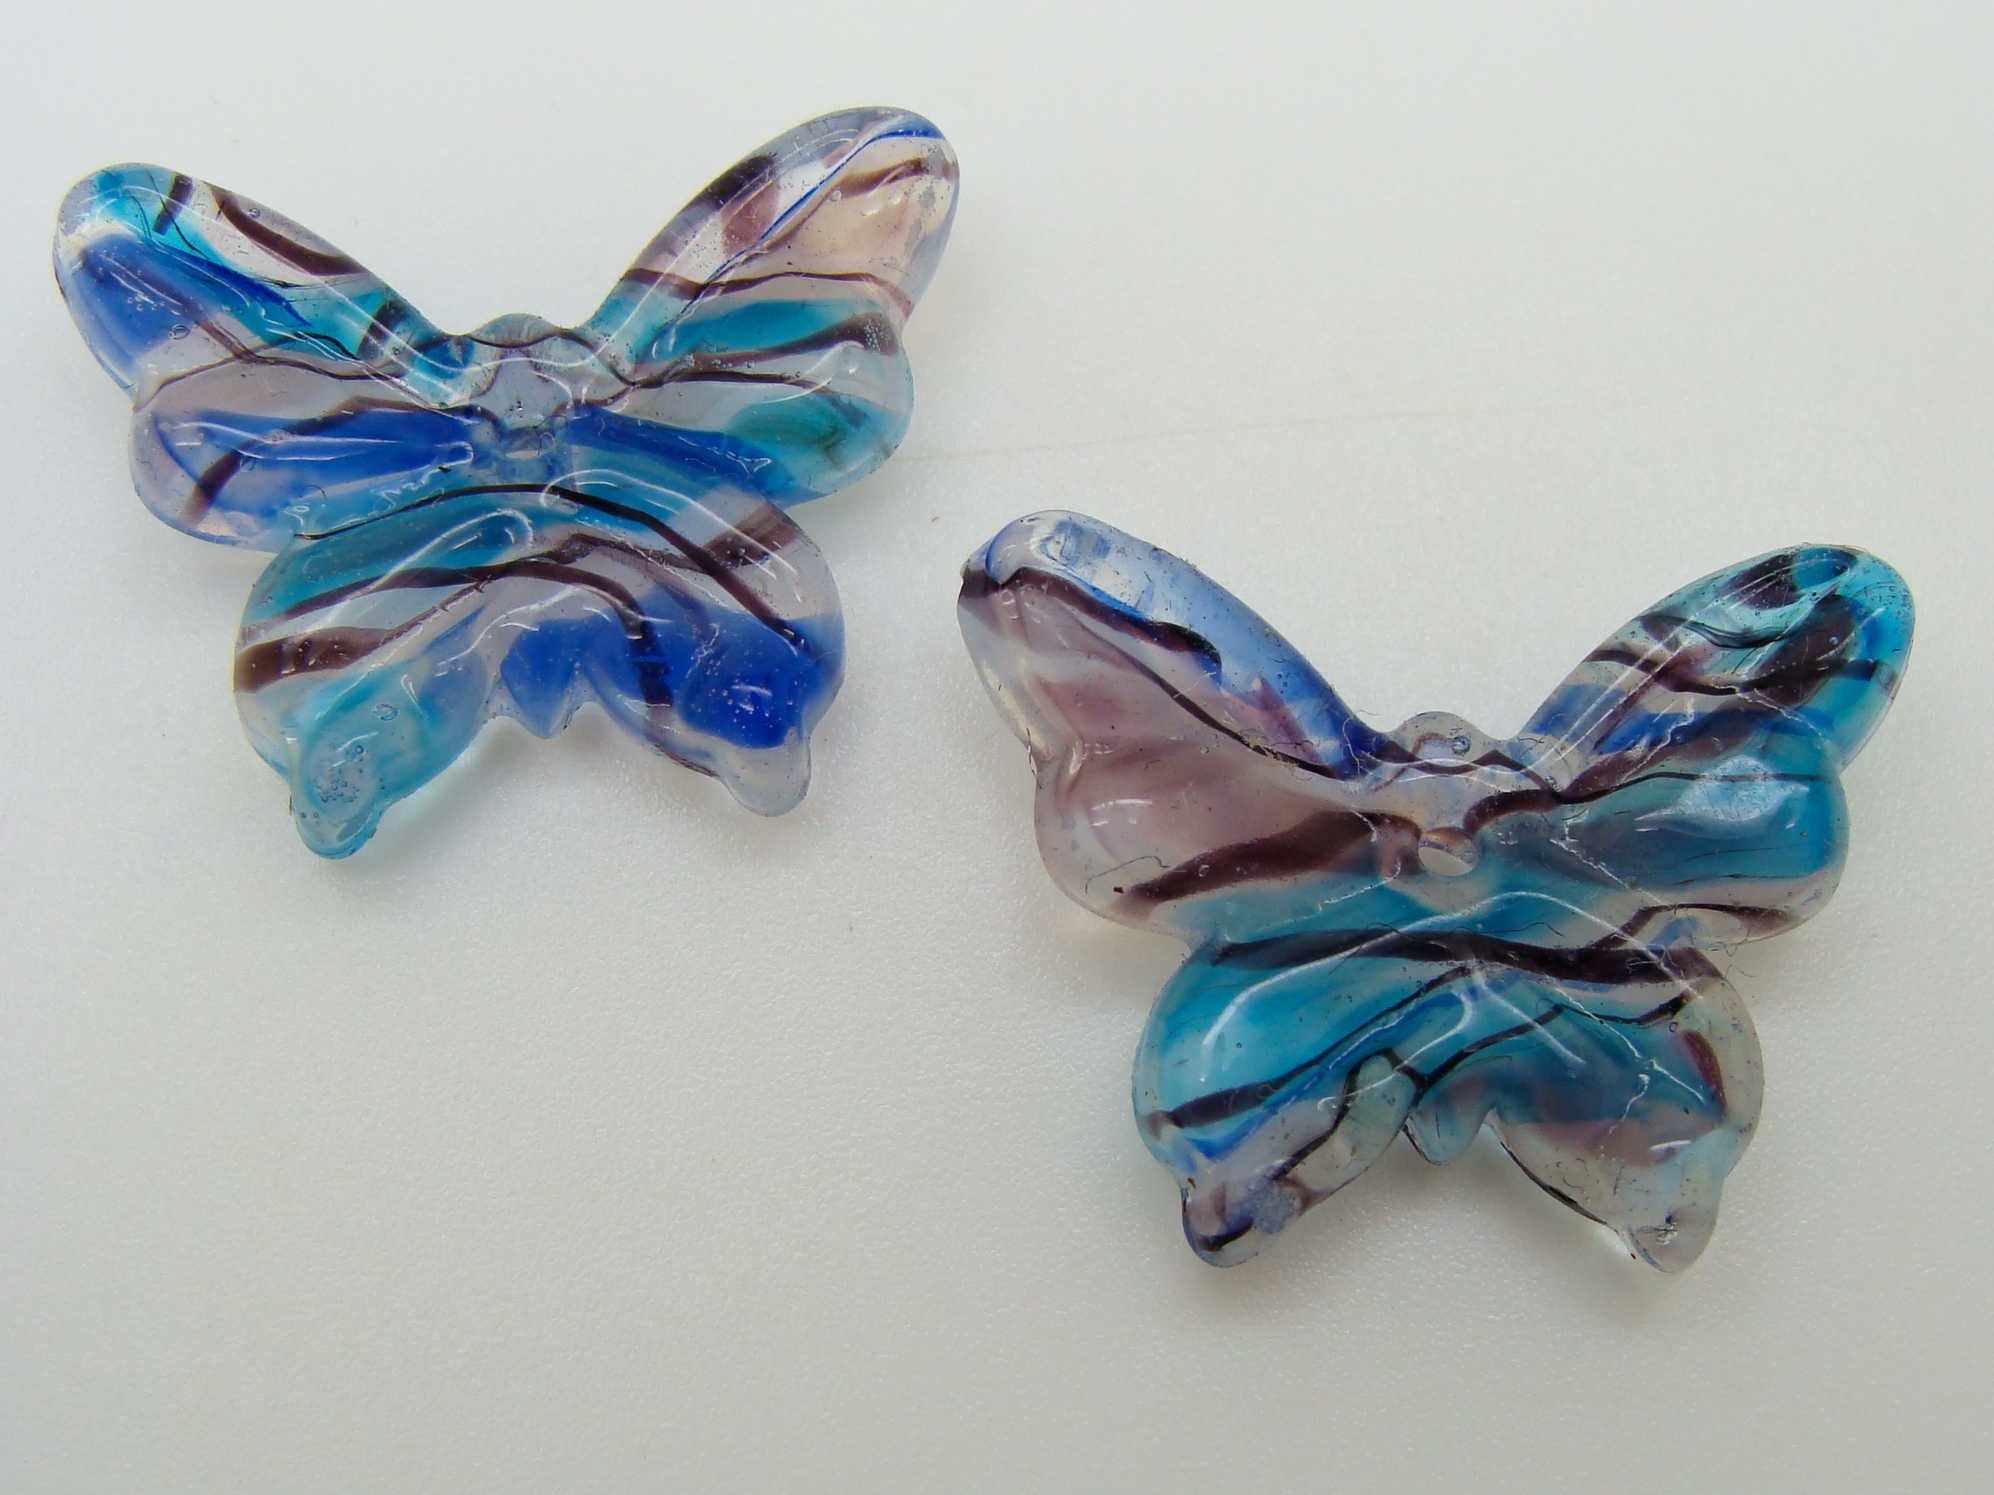 Pend-312-4 mini pendentif papillon bleu blanc